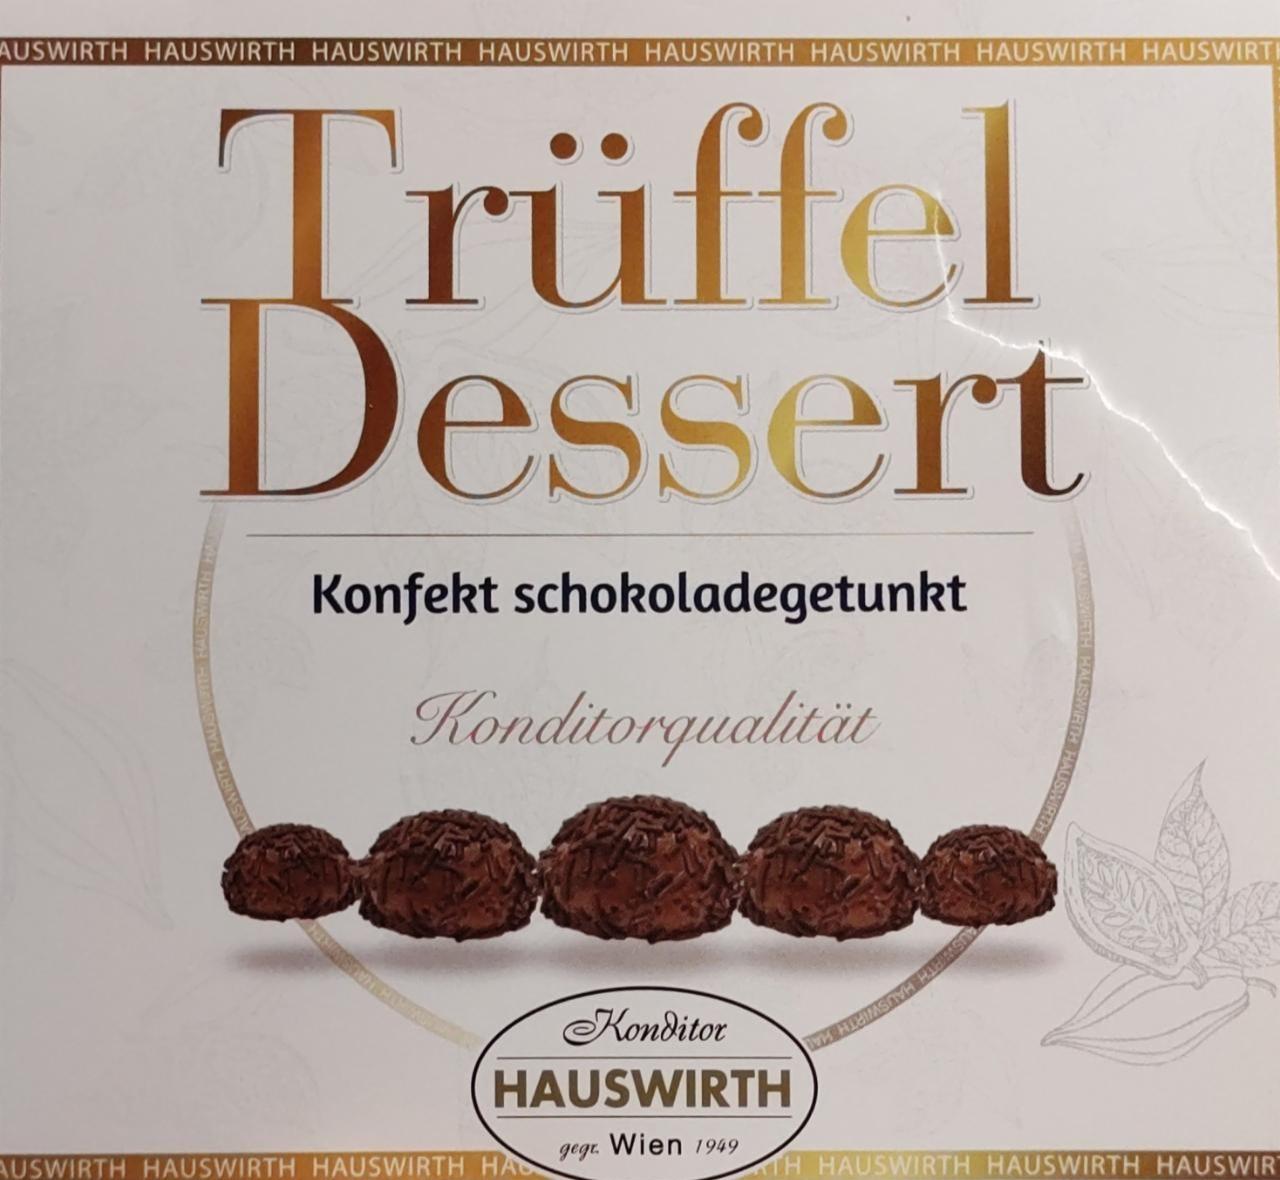 Fotografie - Trüffel Dessert Hauswirth